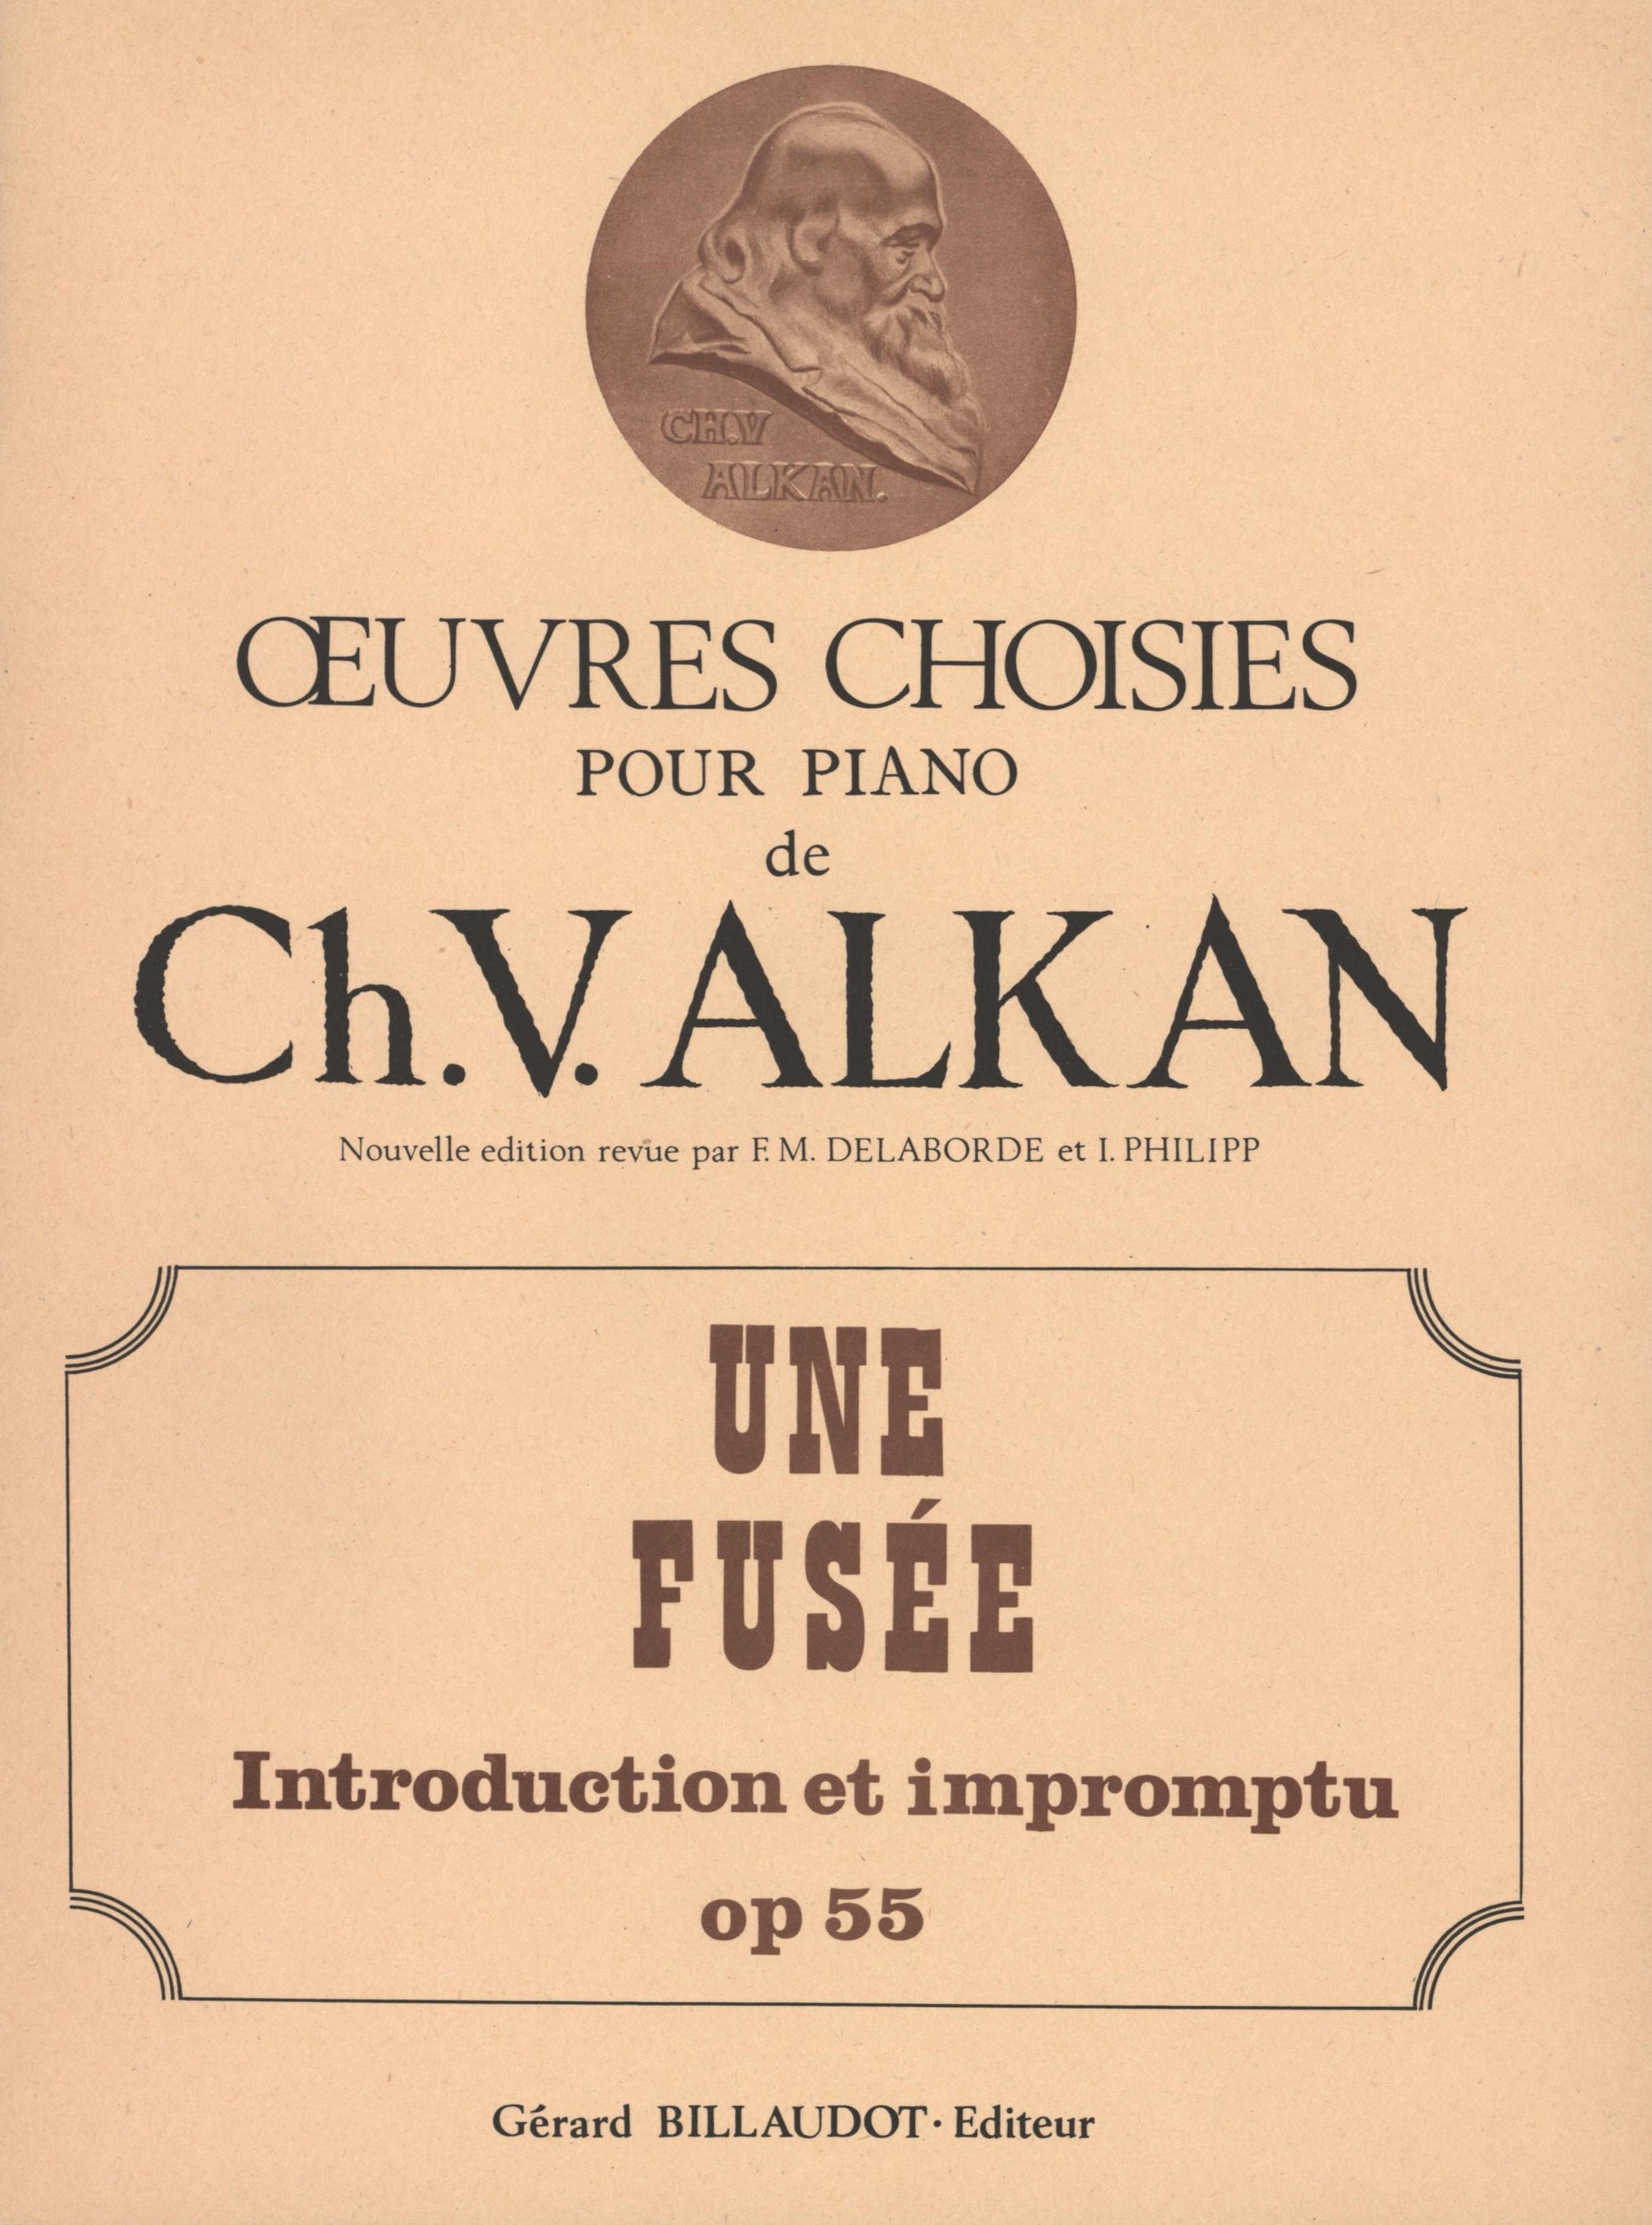 Alkan: Une fusée, Introduction et impromptu, Op. 55